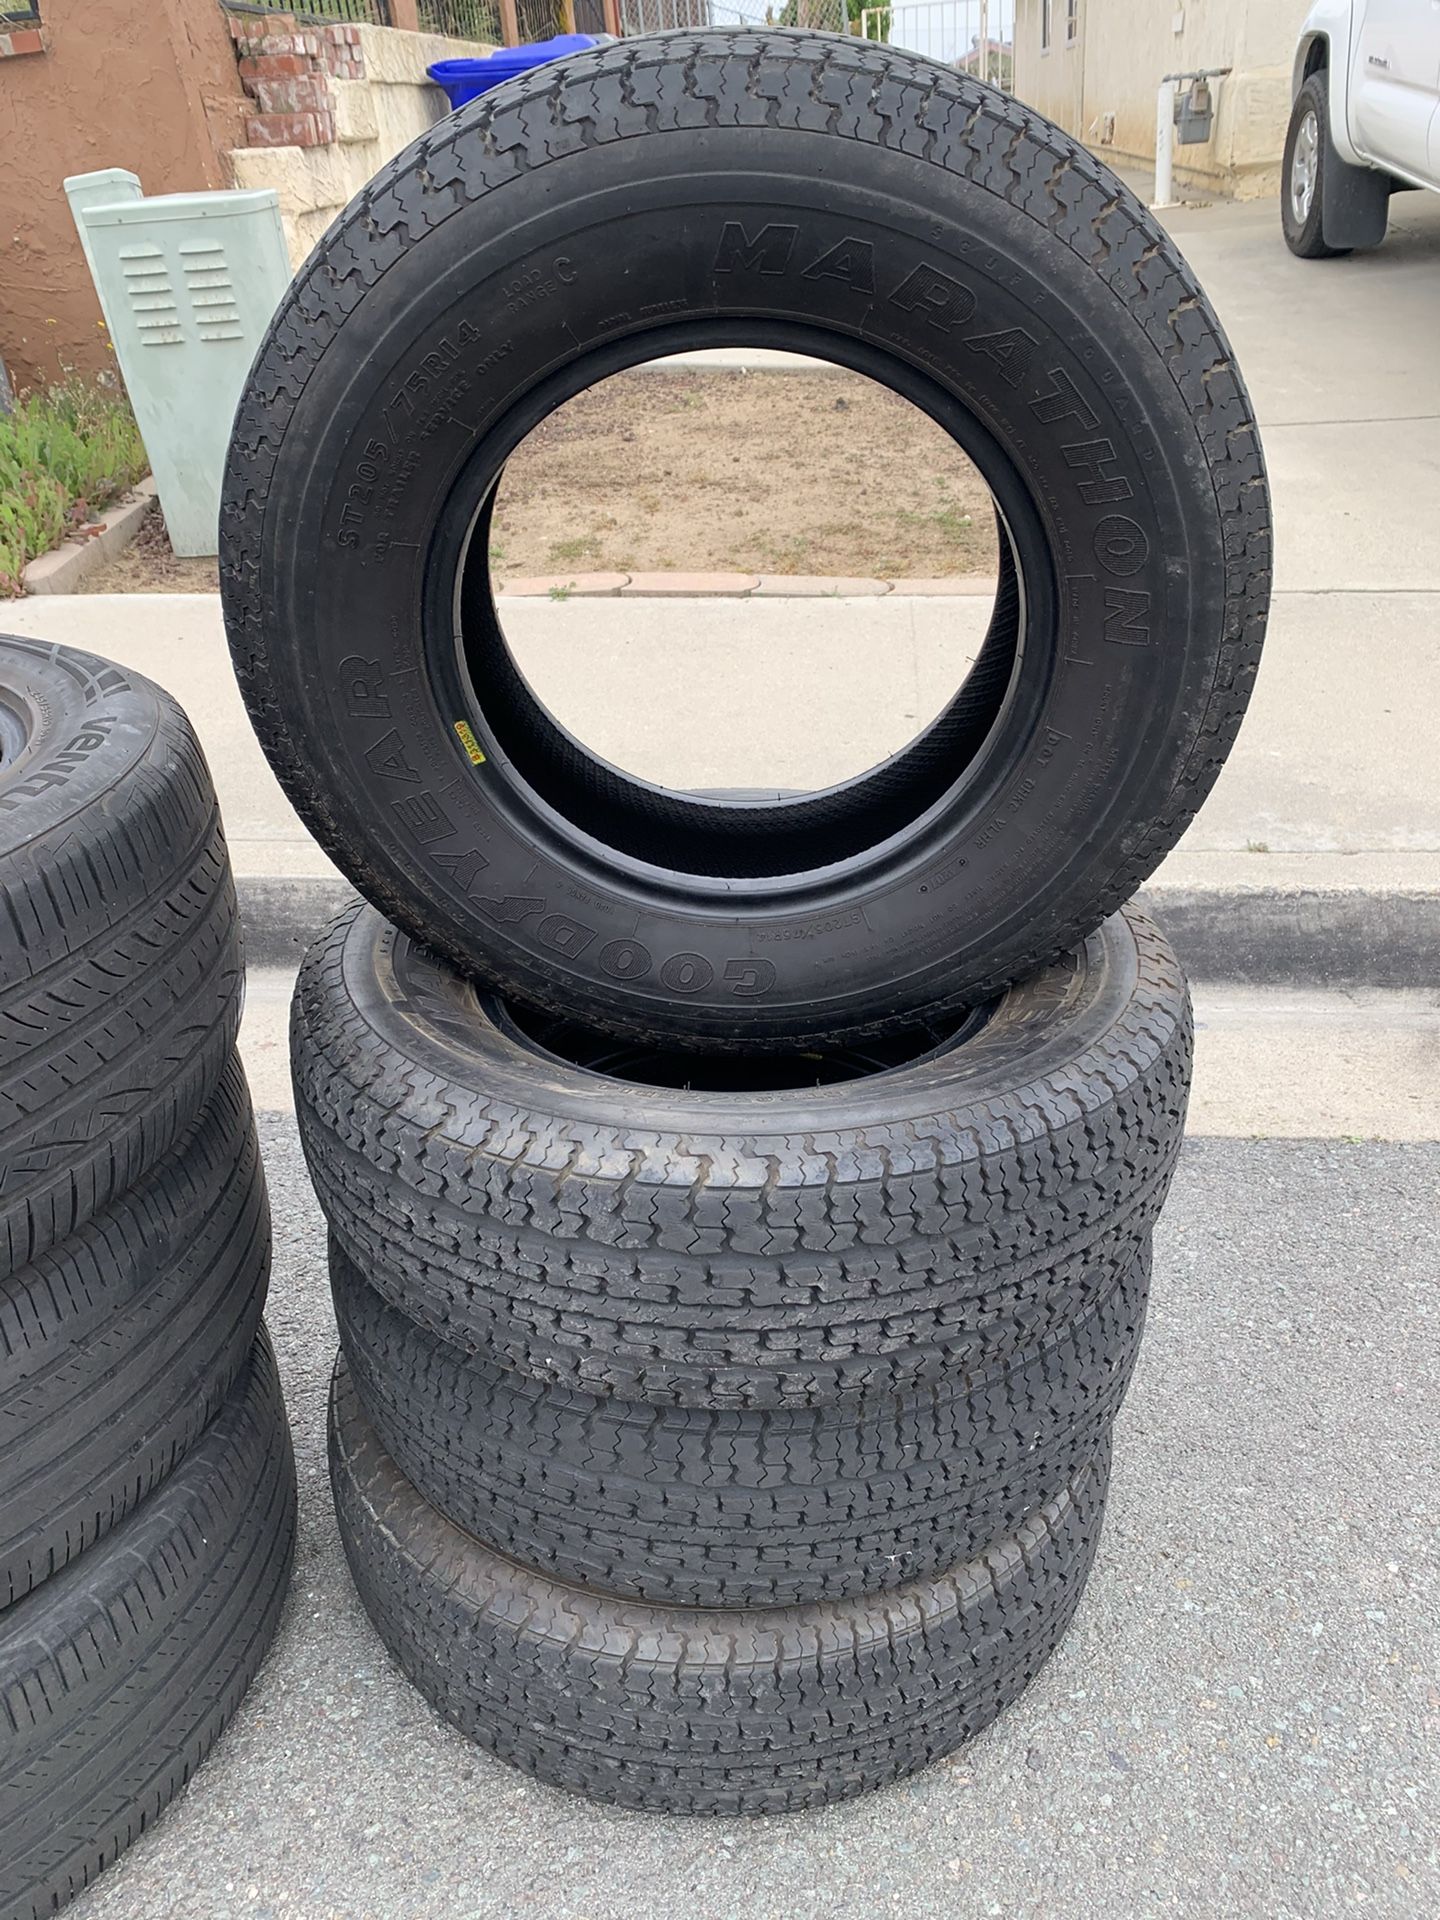 205/75/14 tires